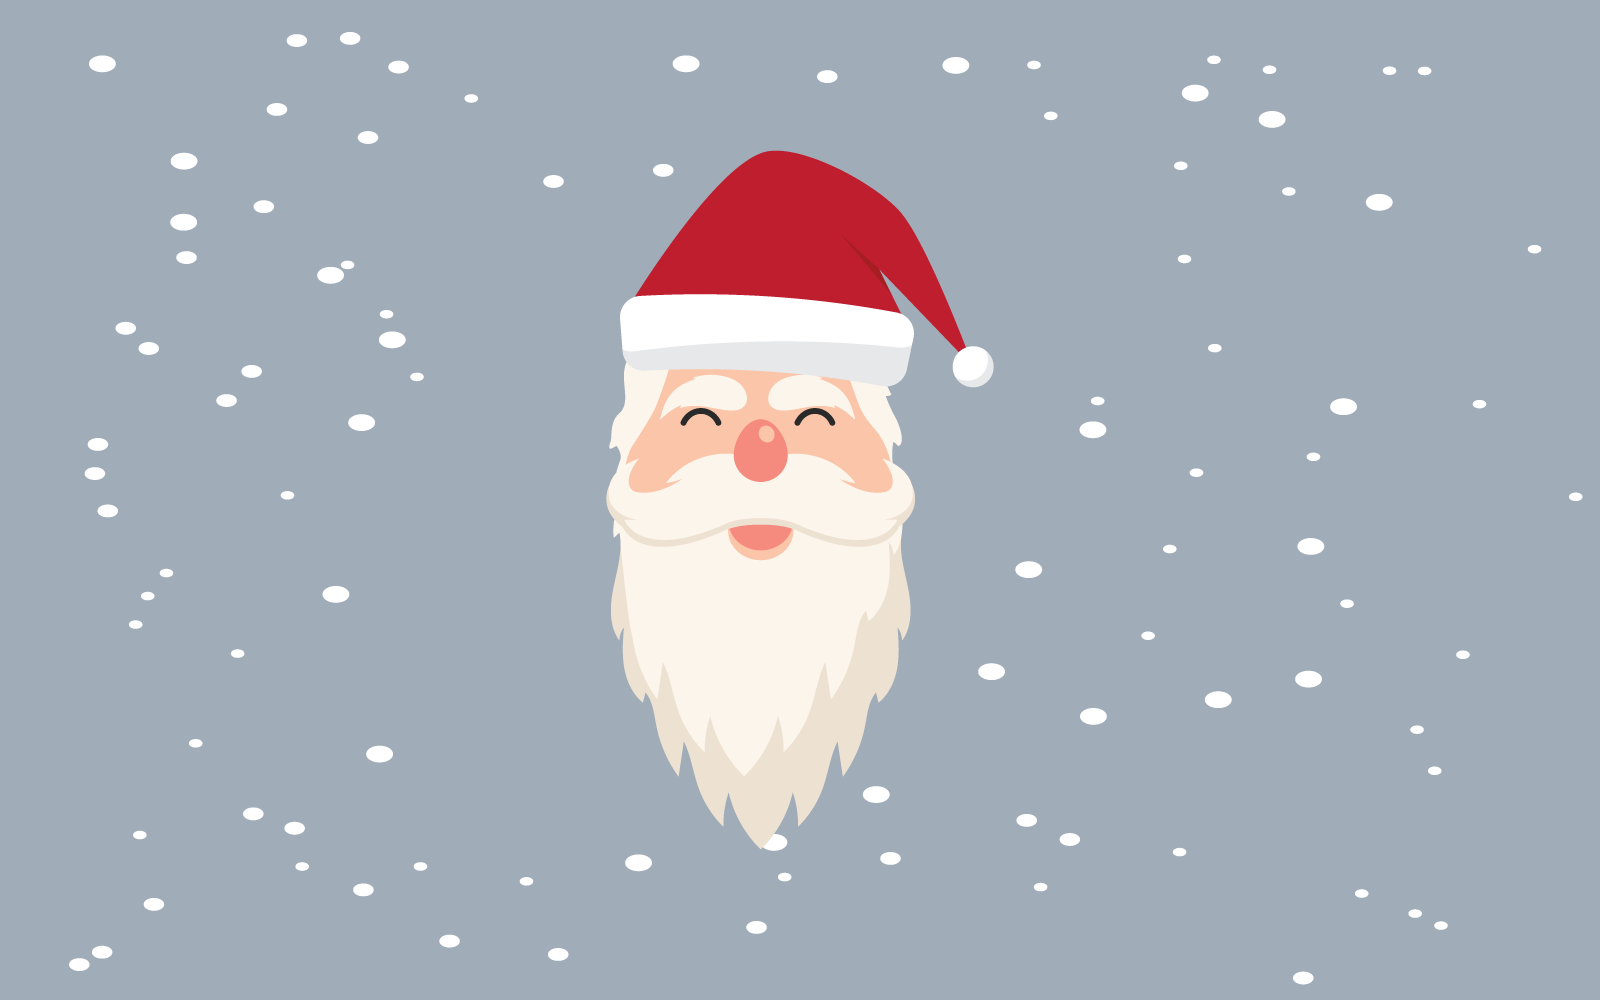 Santa face cartoon character icon flat design template